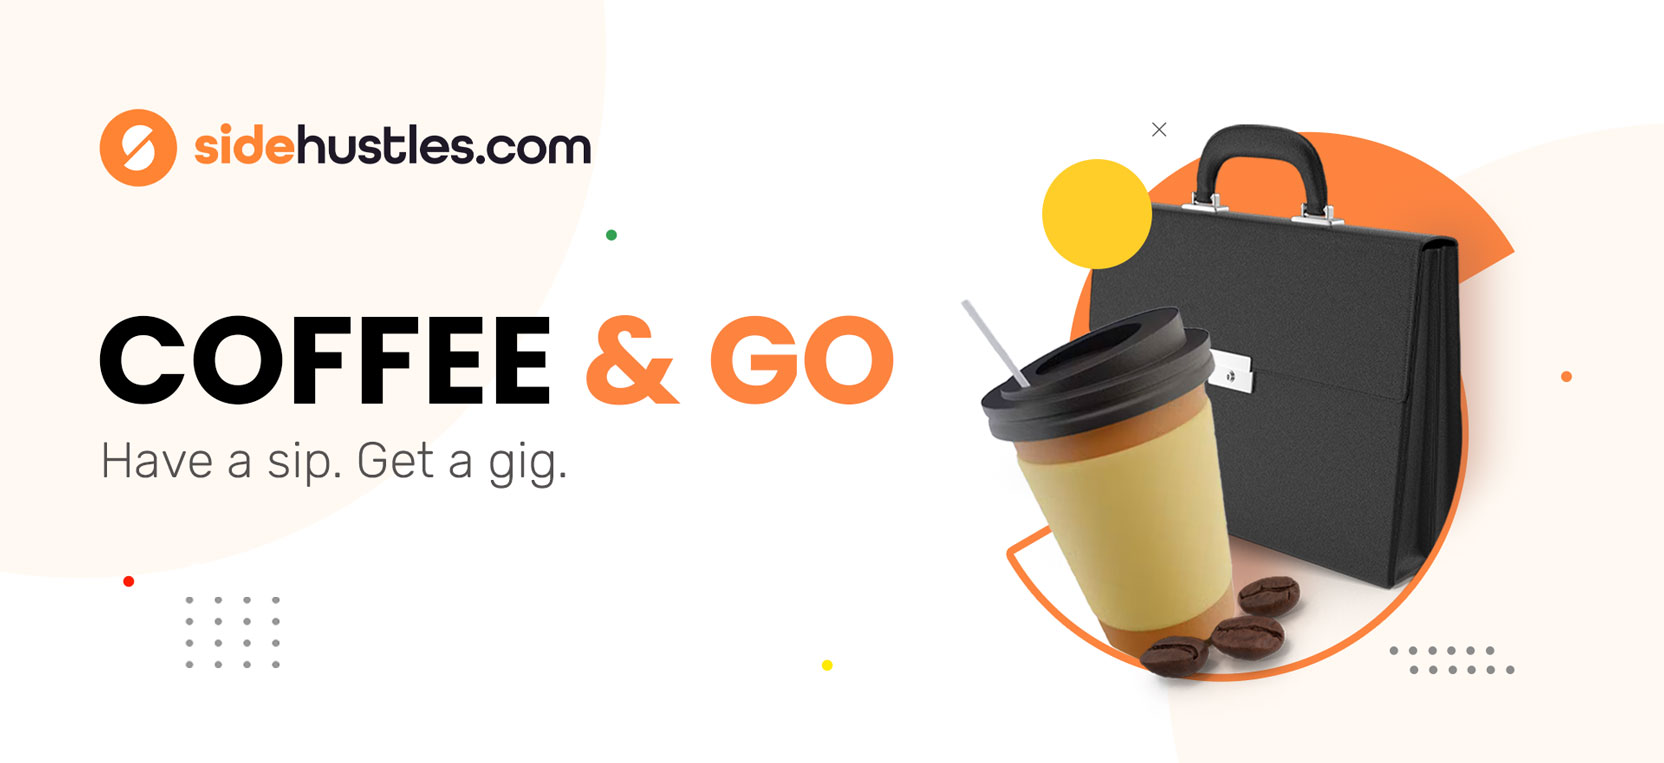 SideHustles.com Coffee & Go Side Gigs & Remote Work Newsletter Banner